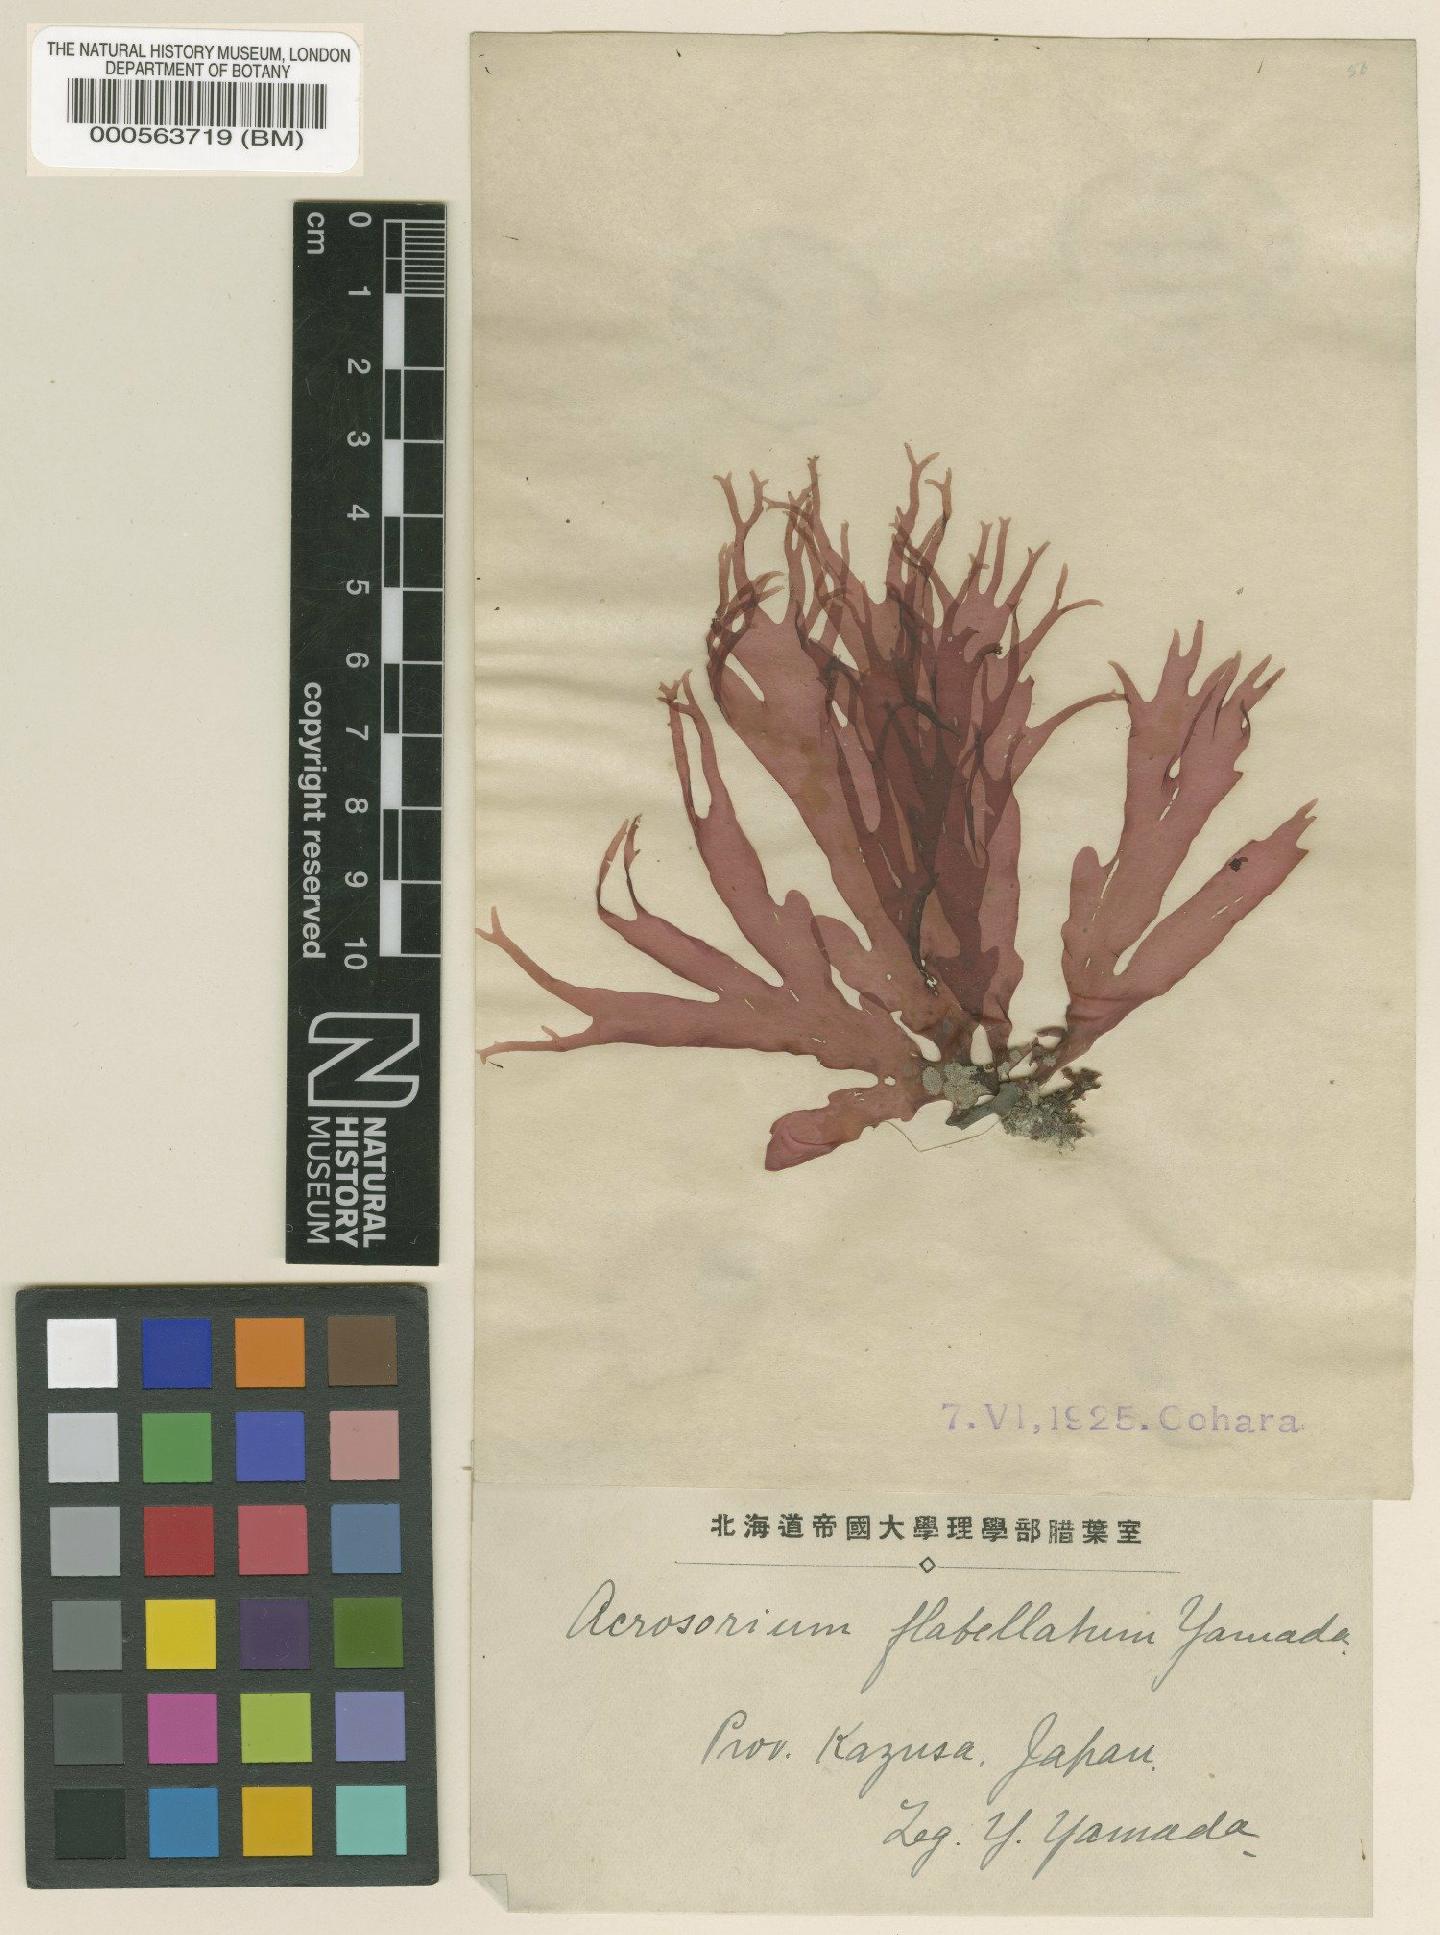 To NHMUK collection (Acrosorium flabellatum Yamada; TYPE; NHMUK:ecatalogue:4785694)